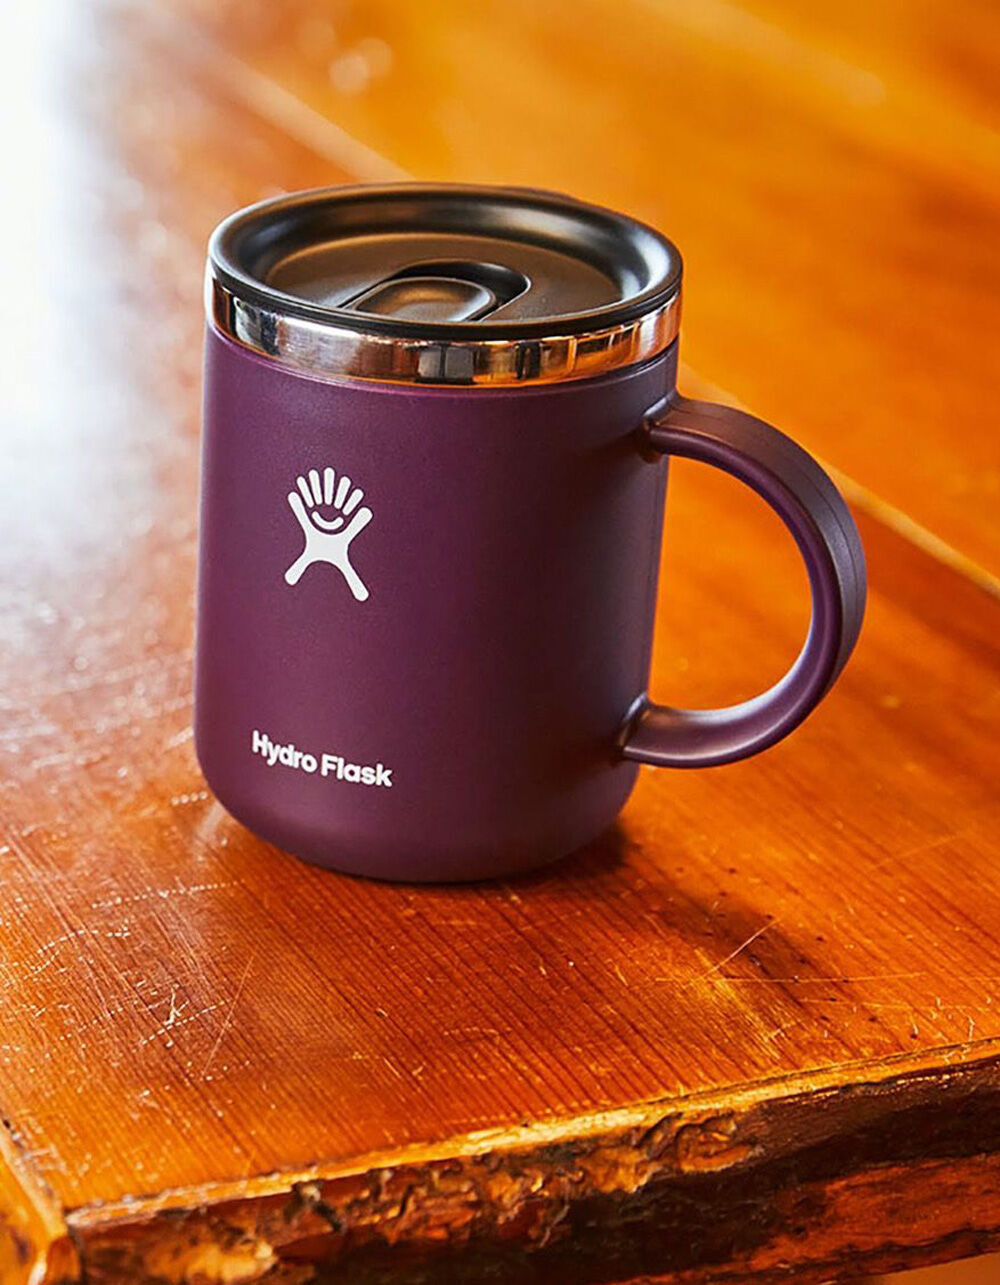 Hydro Flask 12 oz Coffee Mug Rain